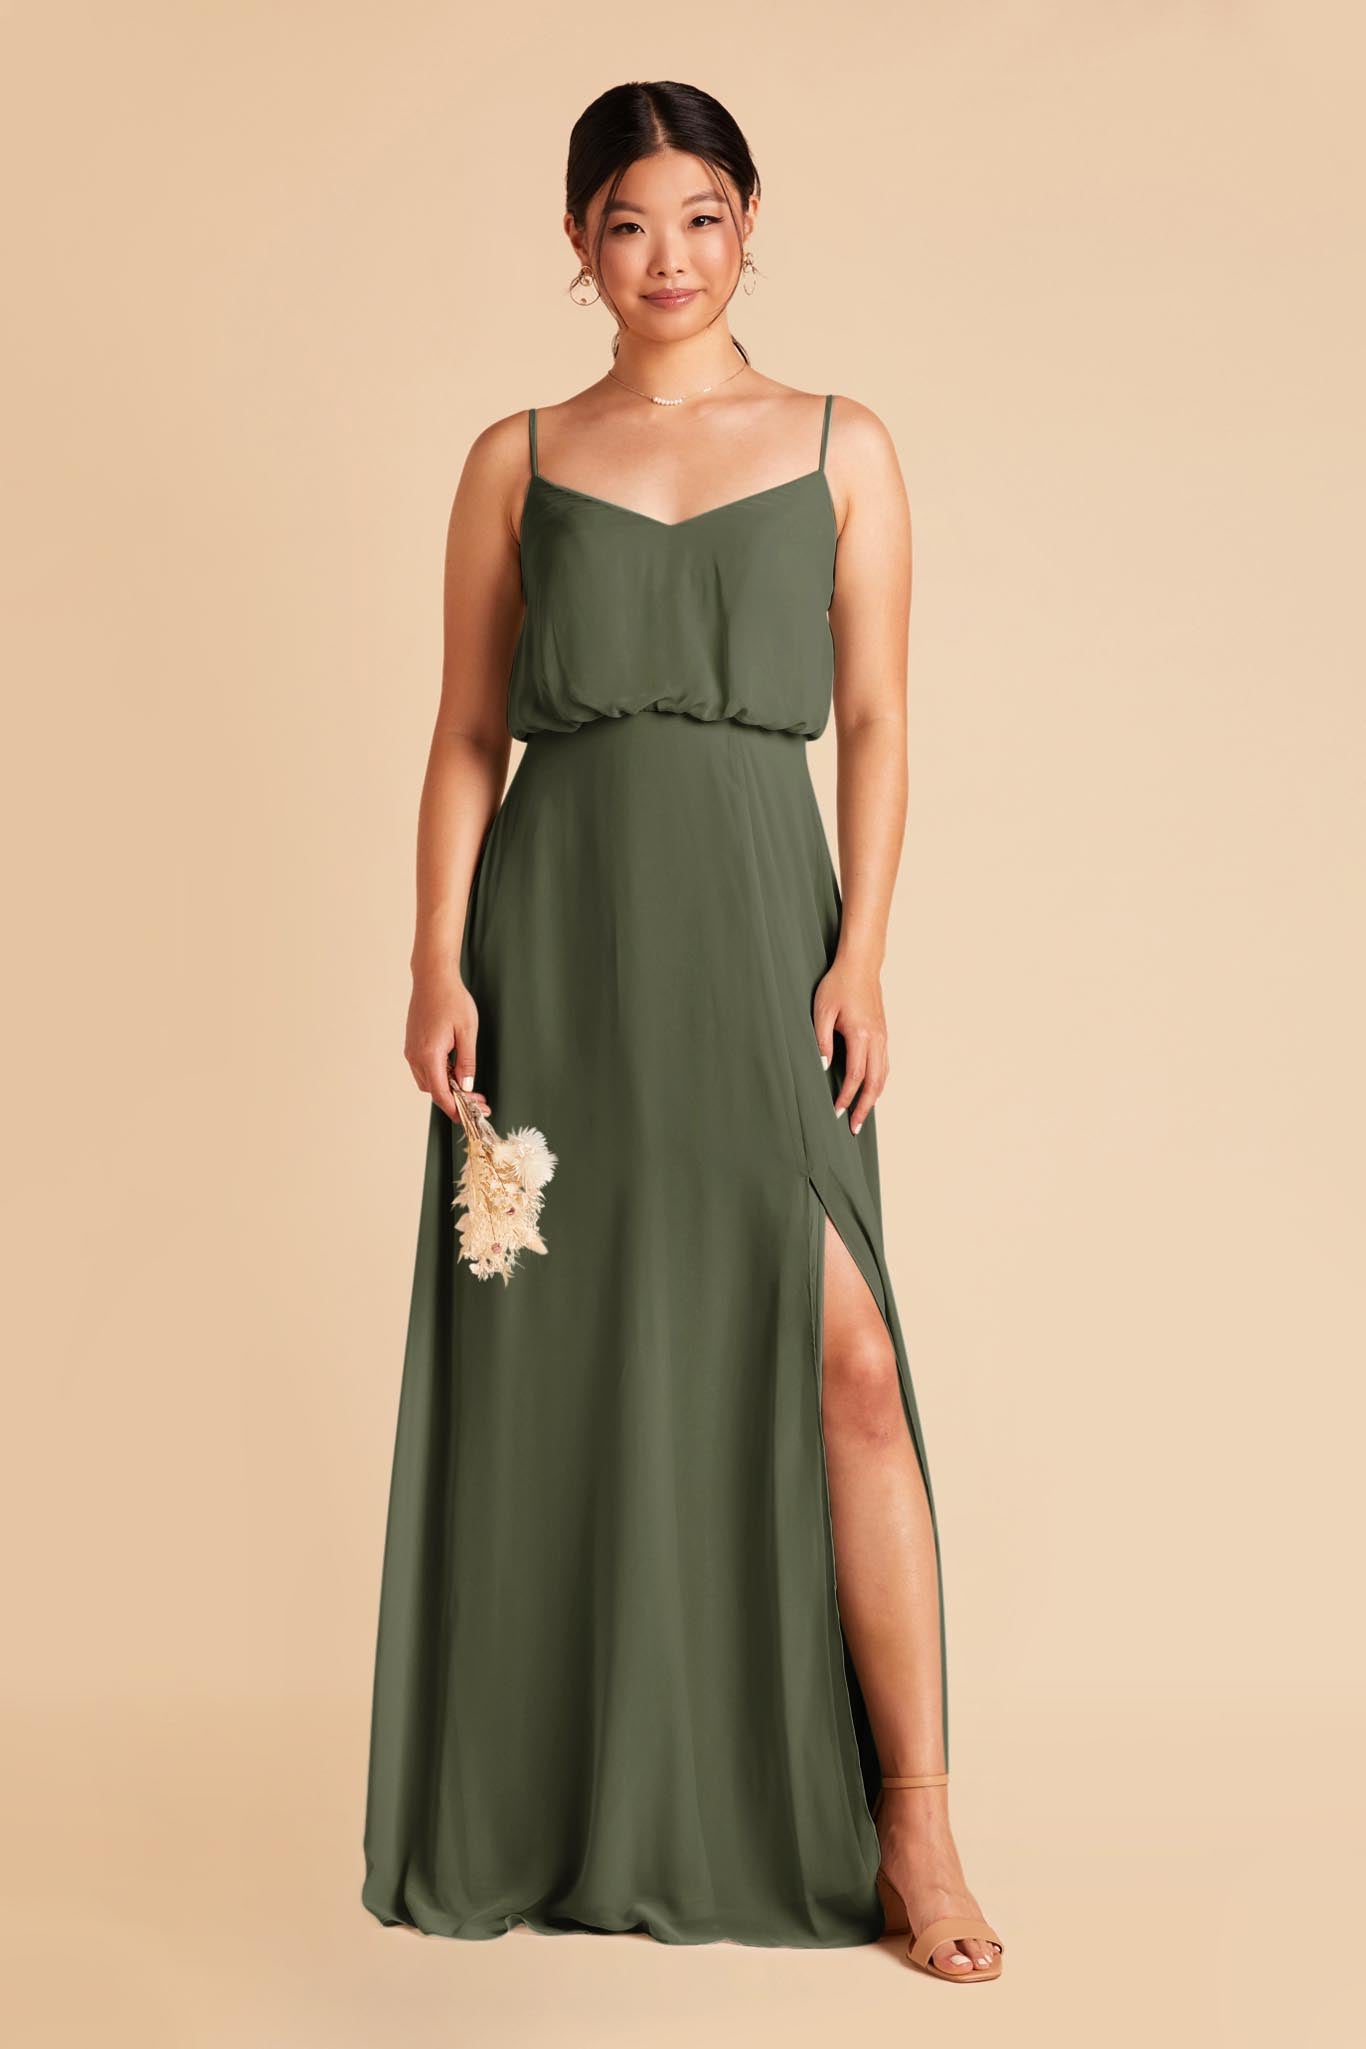 Olive Gwennie Dress by Birdy Grey